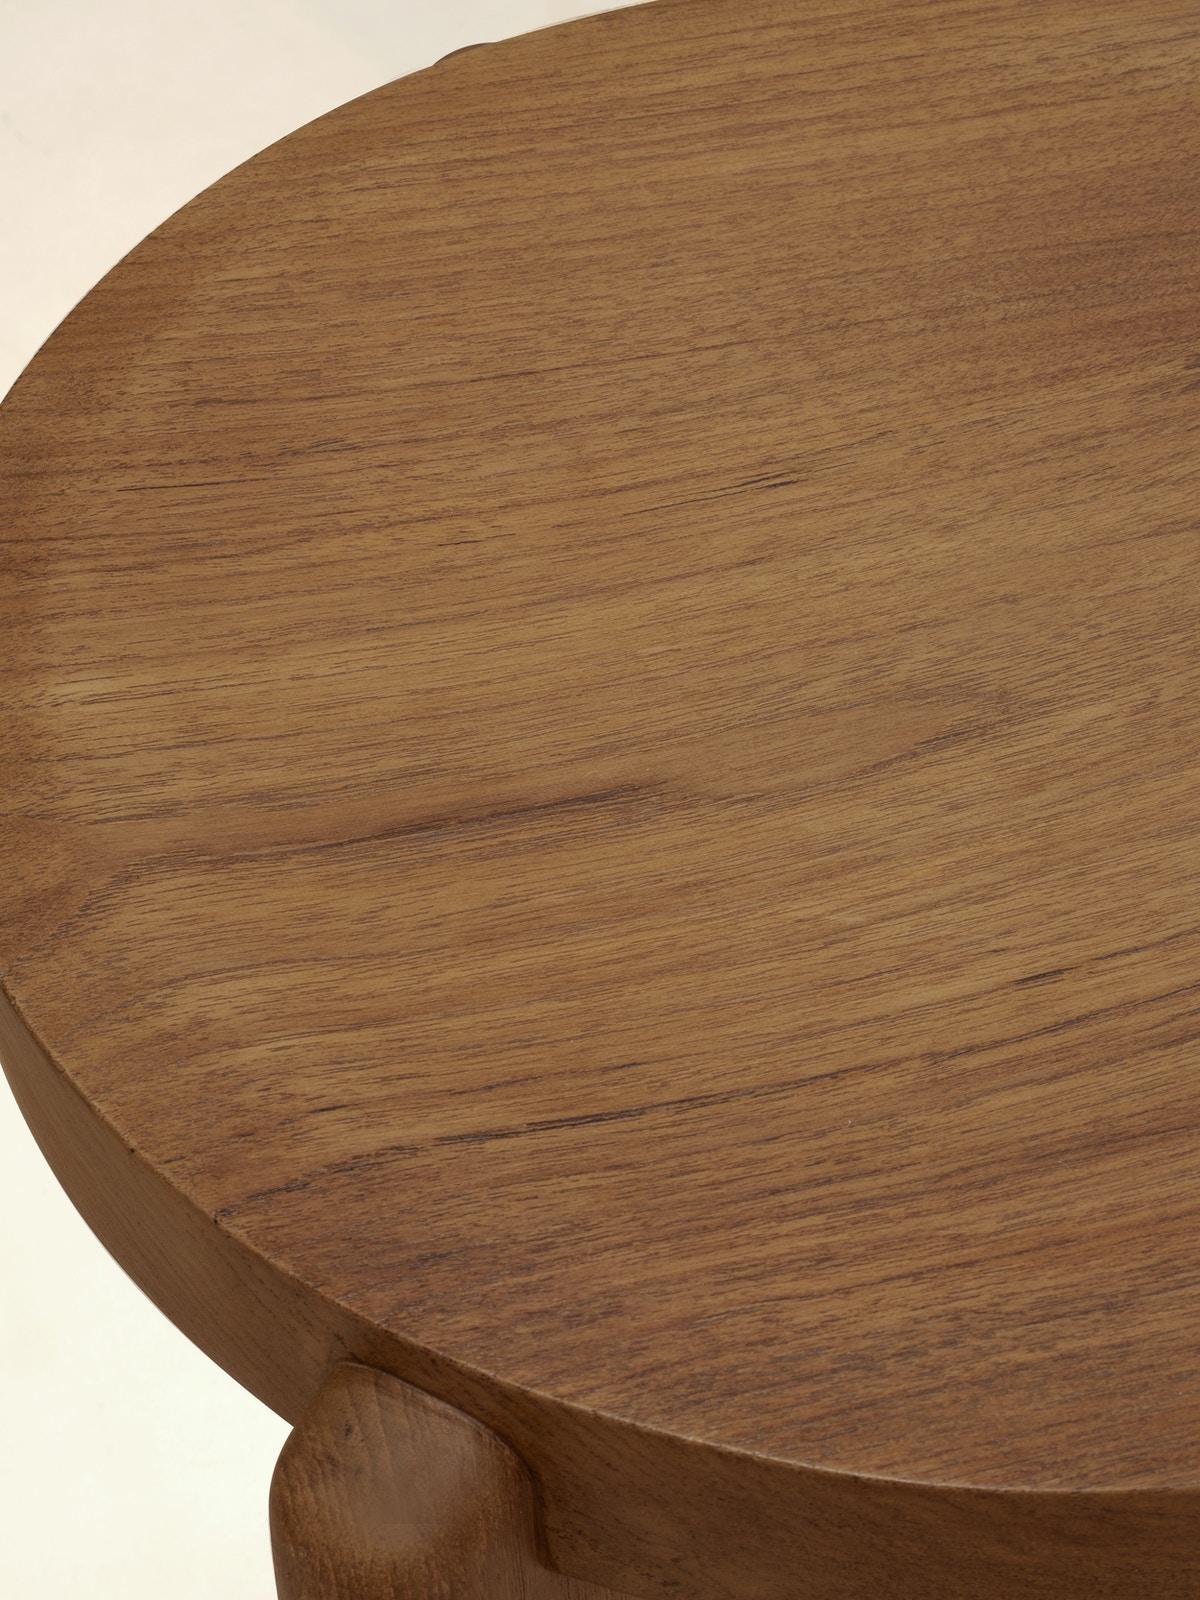 Contemporary 21st Century Designed Counter Stool Teak Wood Brown Metal